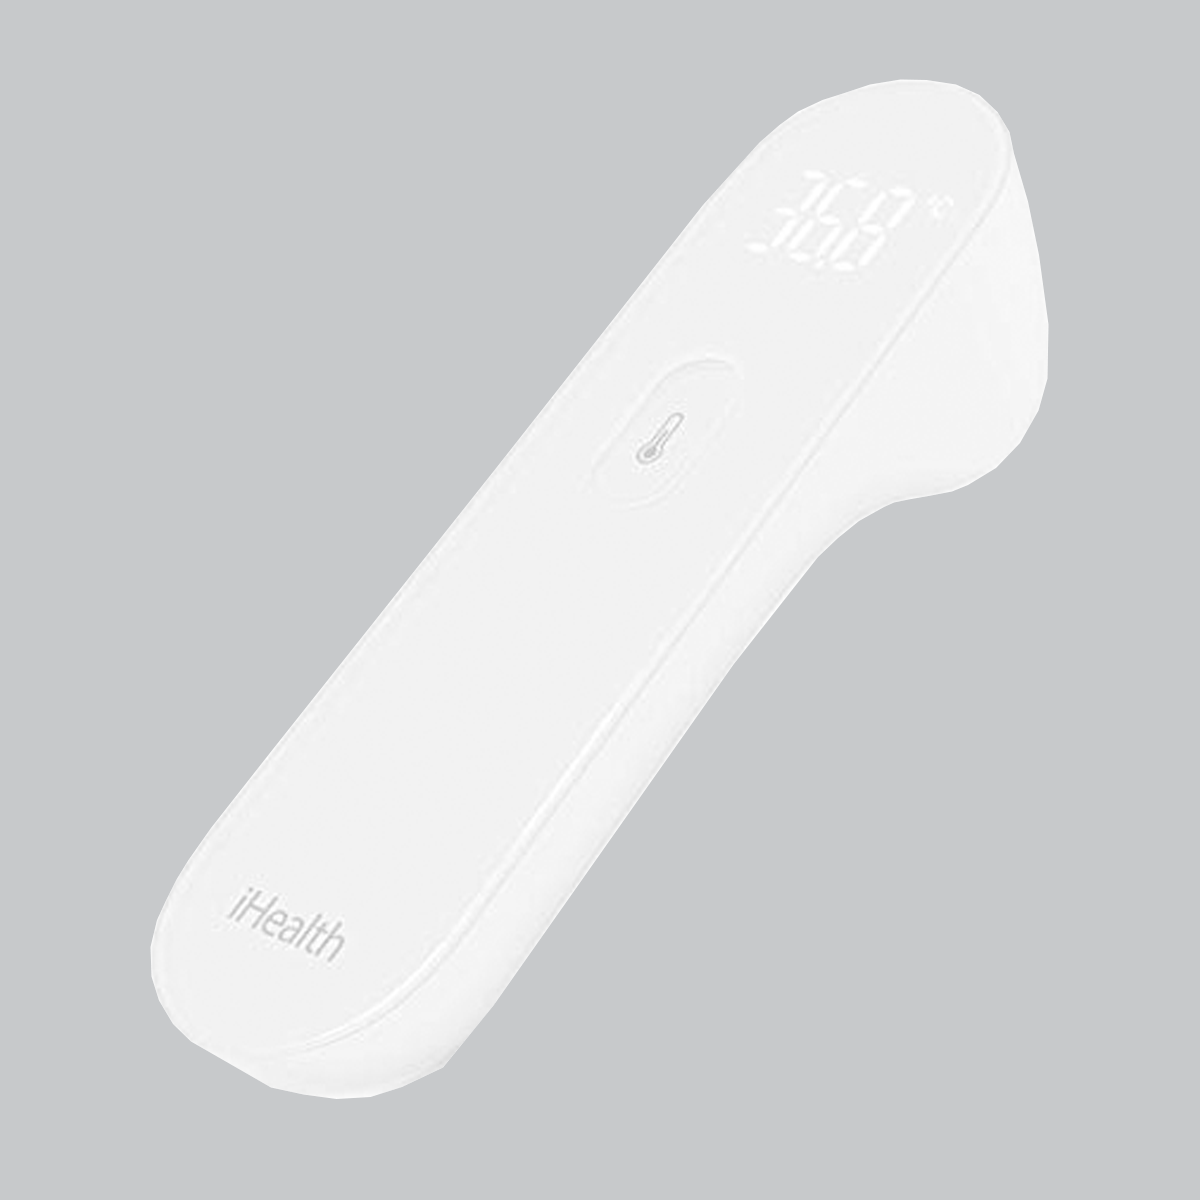 Xiaomi iHealth Thermometer